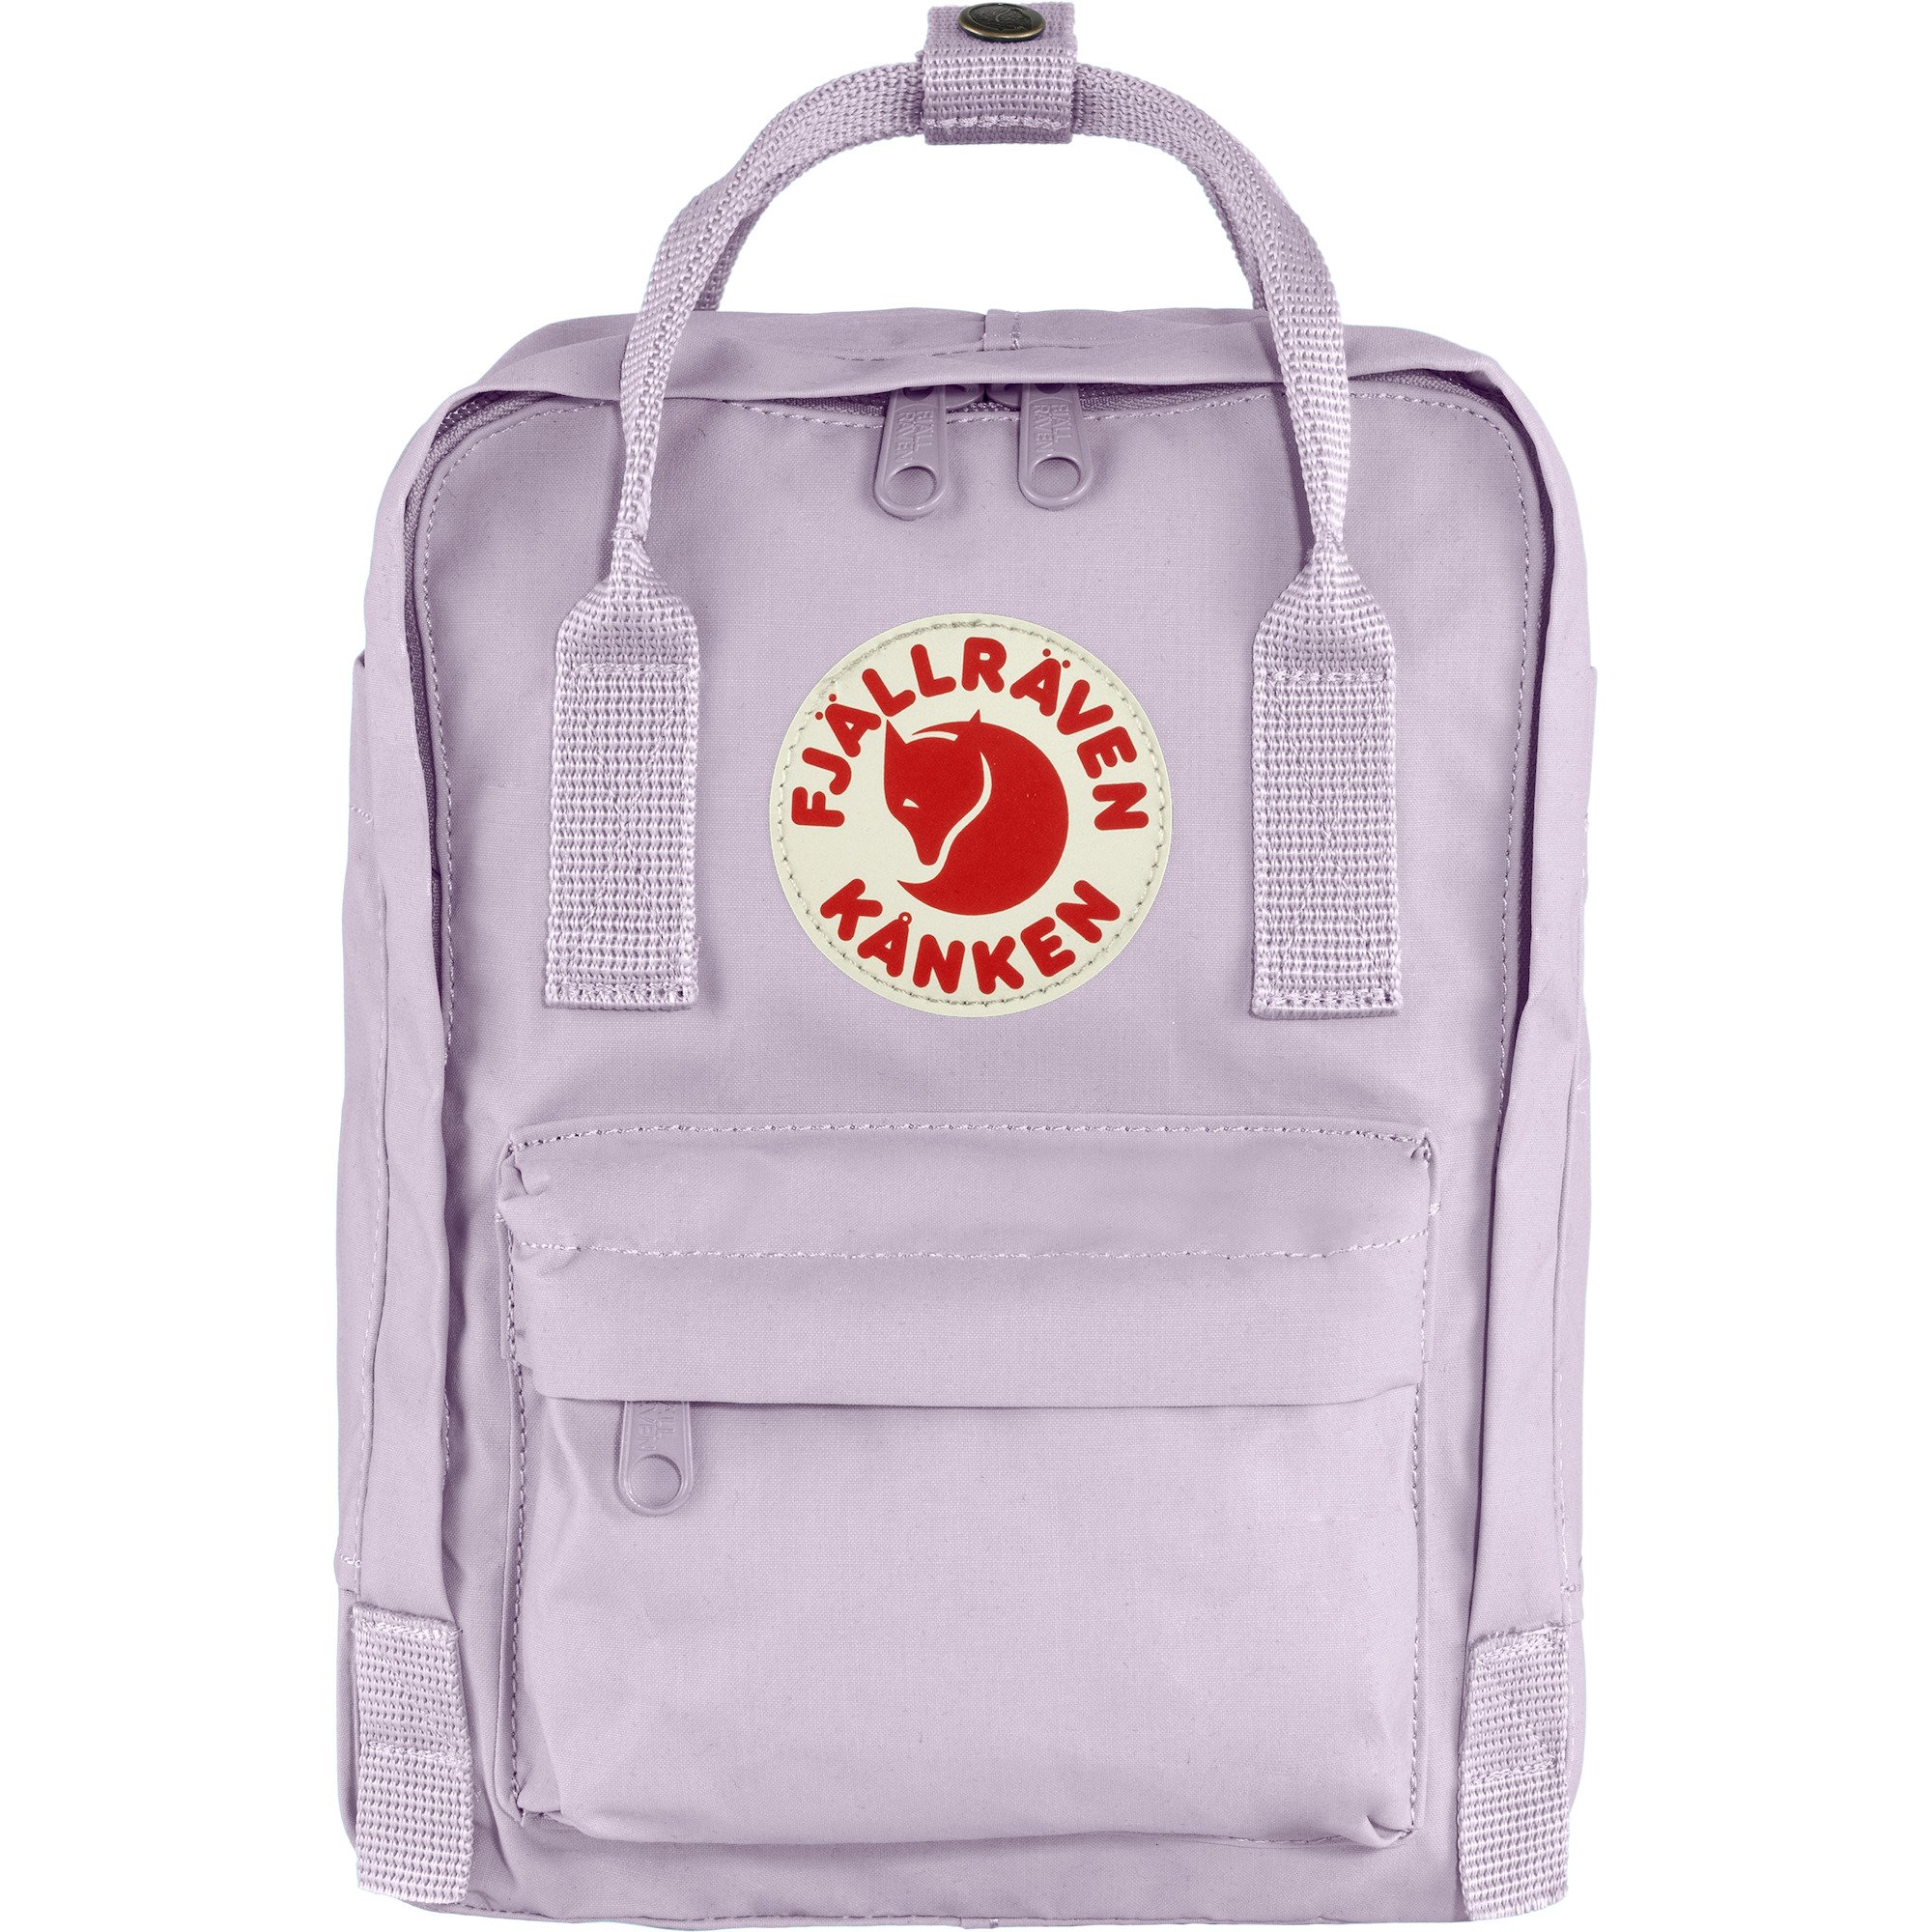 BRAND NEW Fjallraven Classic Kånken Backpack • Baby Blue • School Rucksack 16L 